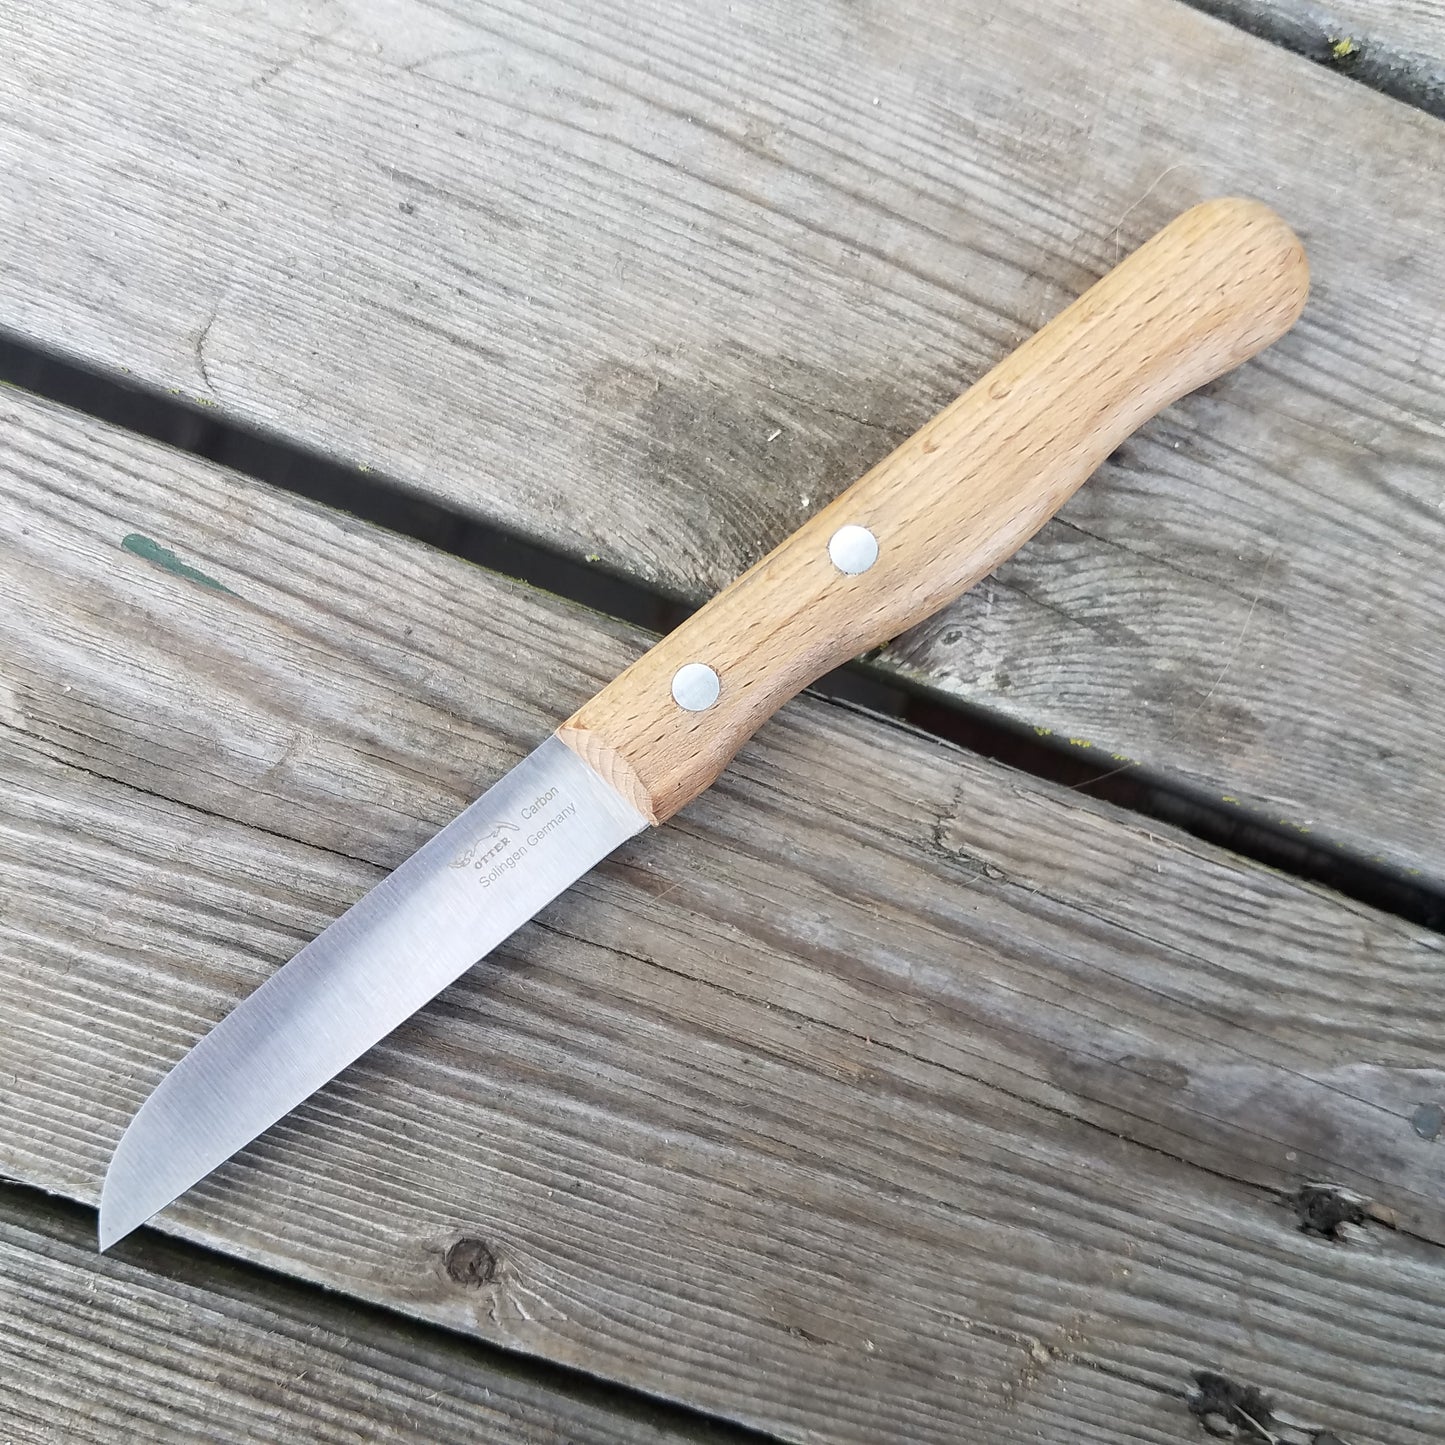 Otter Messer 3" Paring Knife Stainless